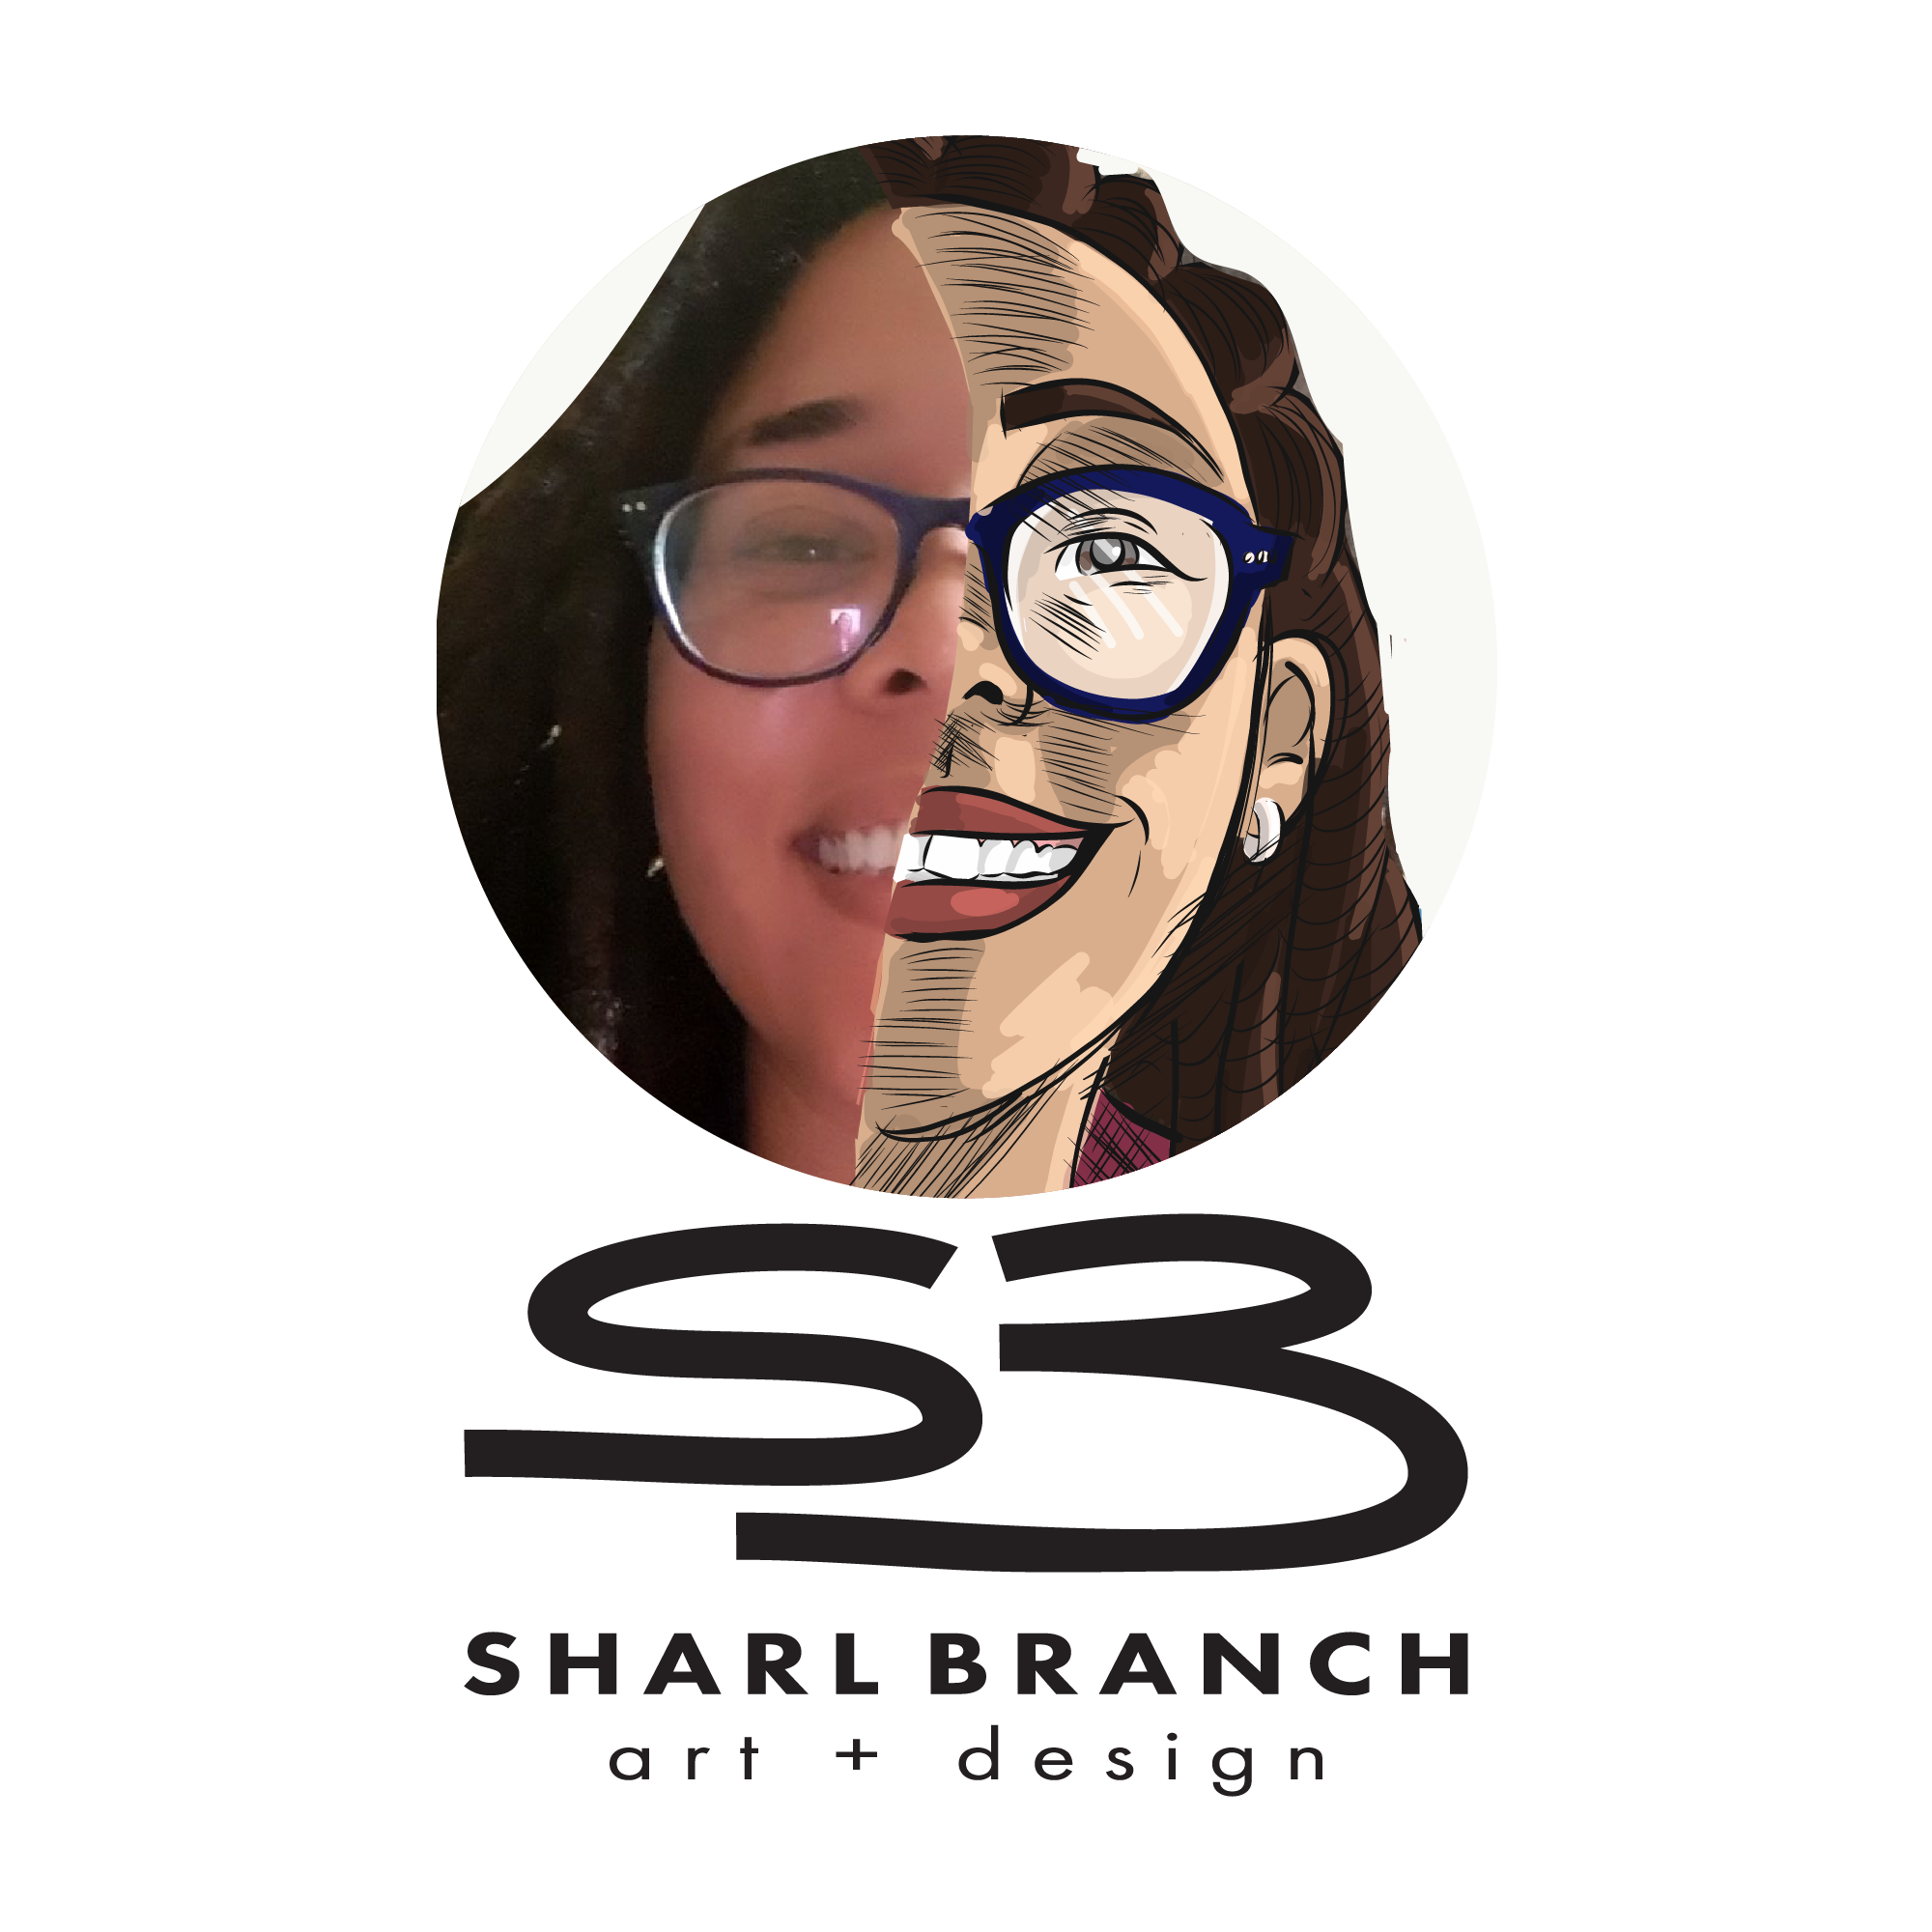 Sharl Branch Art + Design